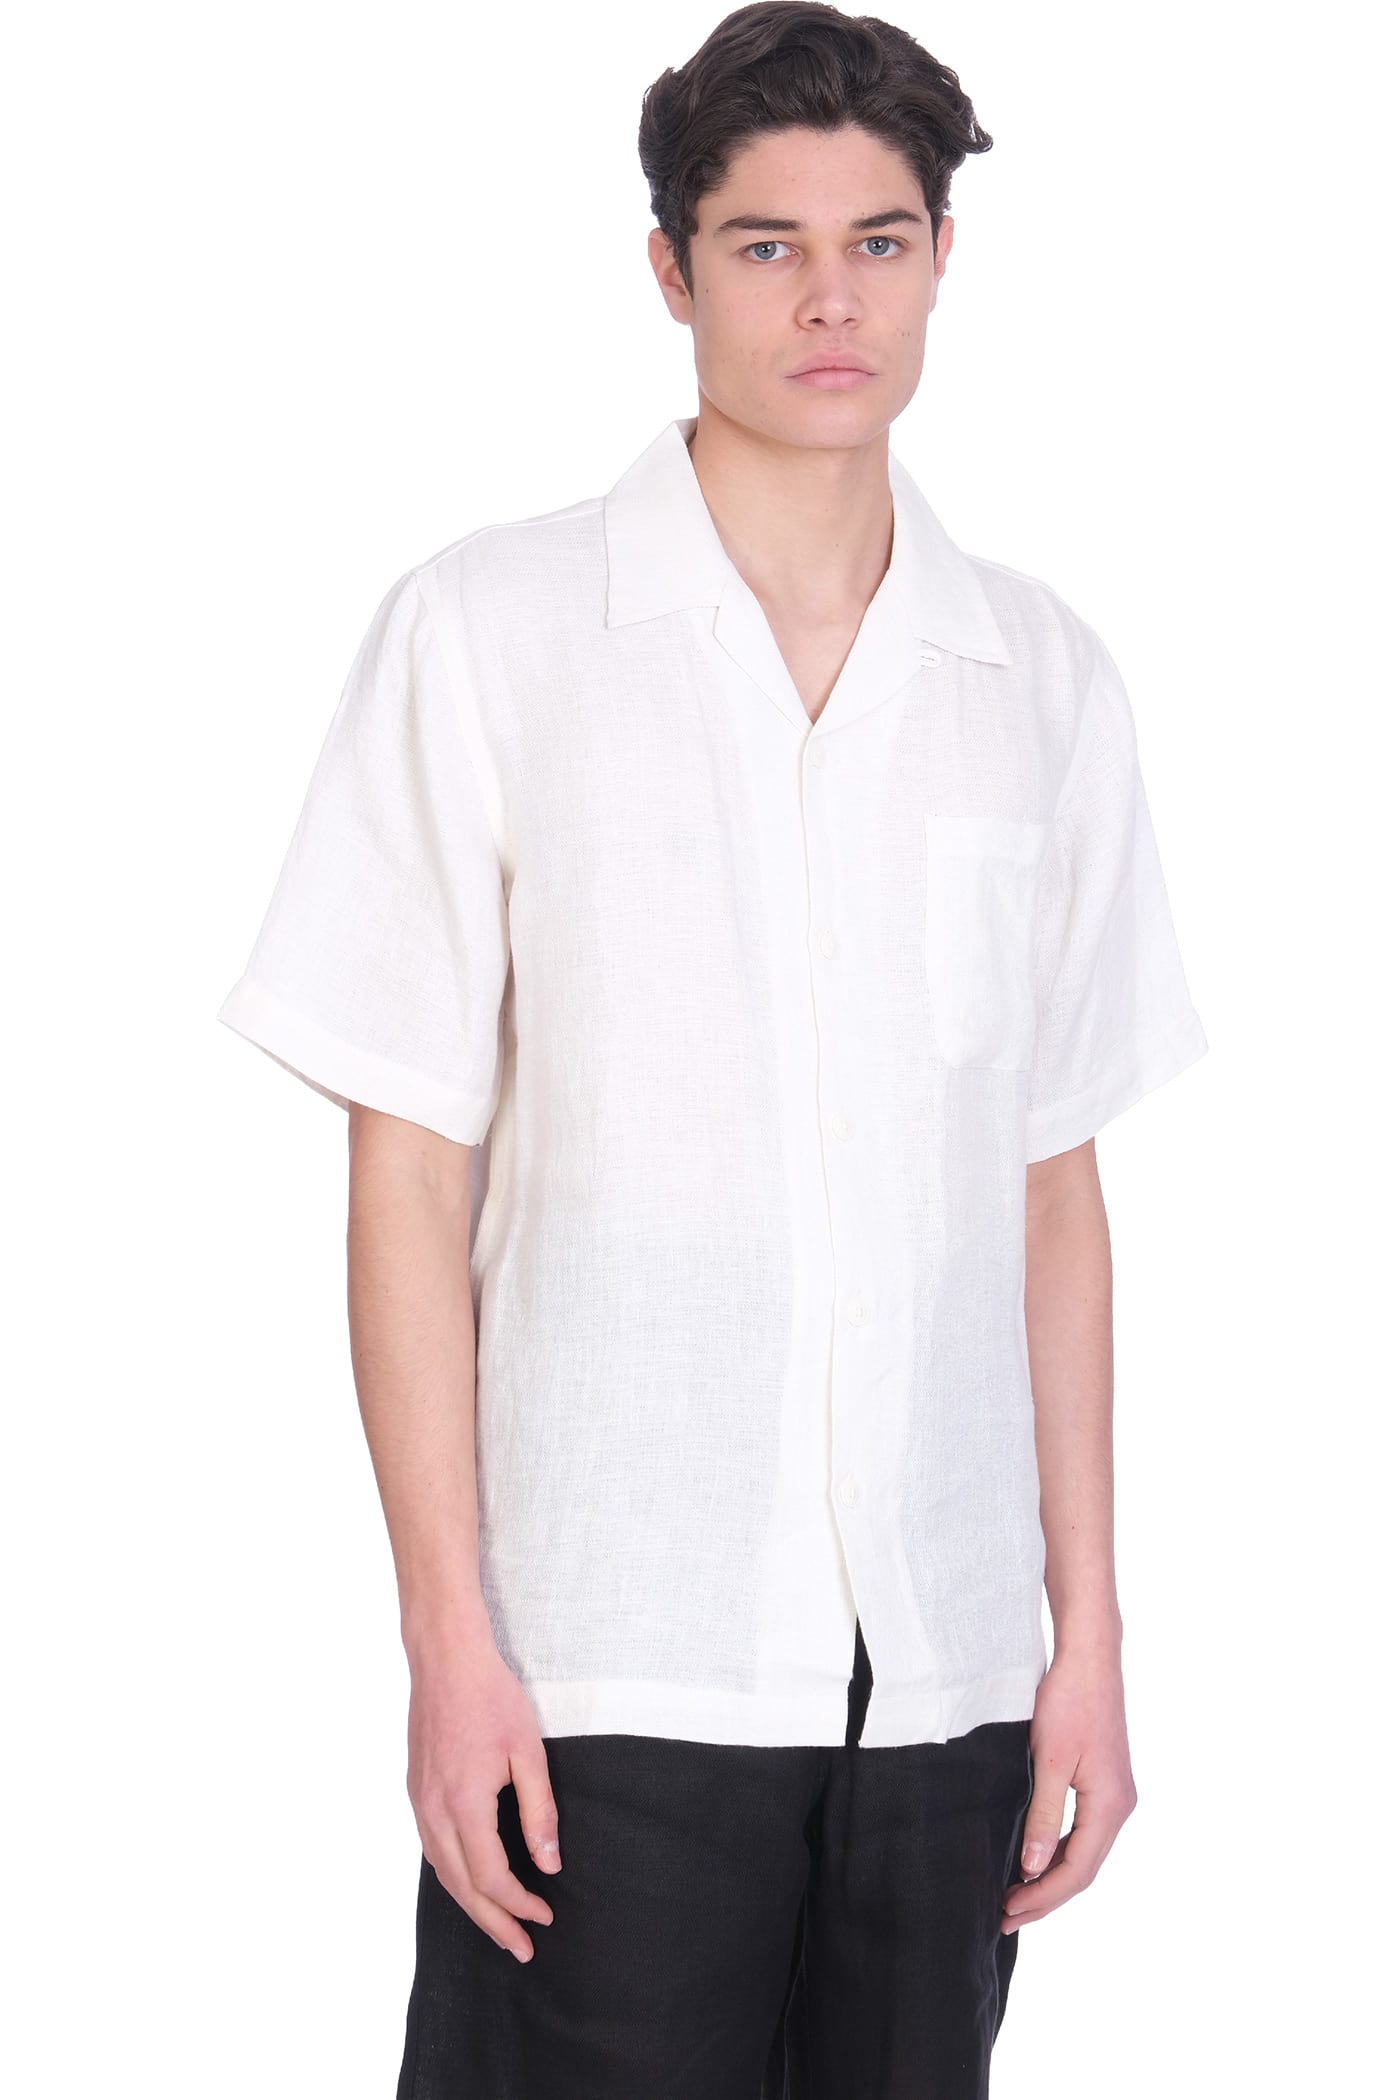 Maharishi Shirt In White Cotton